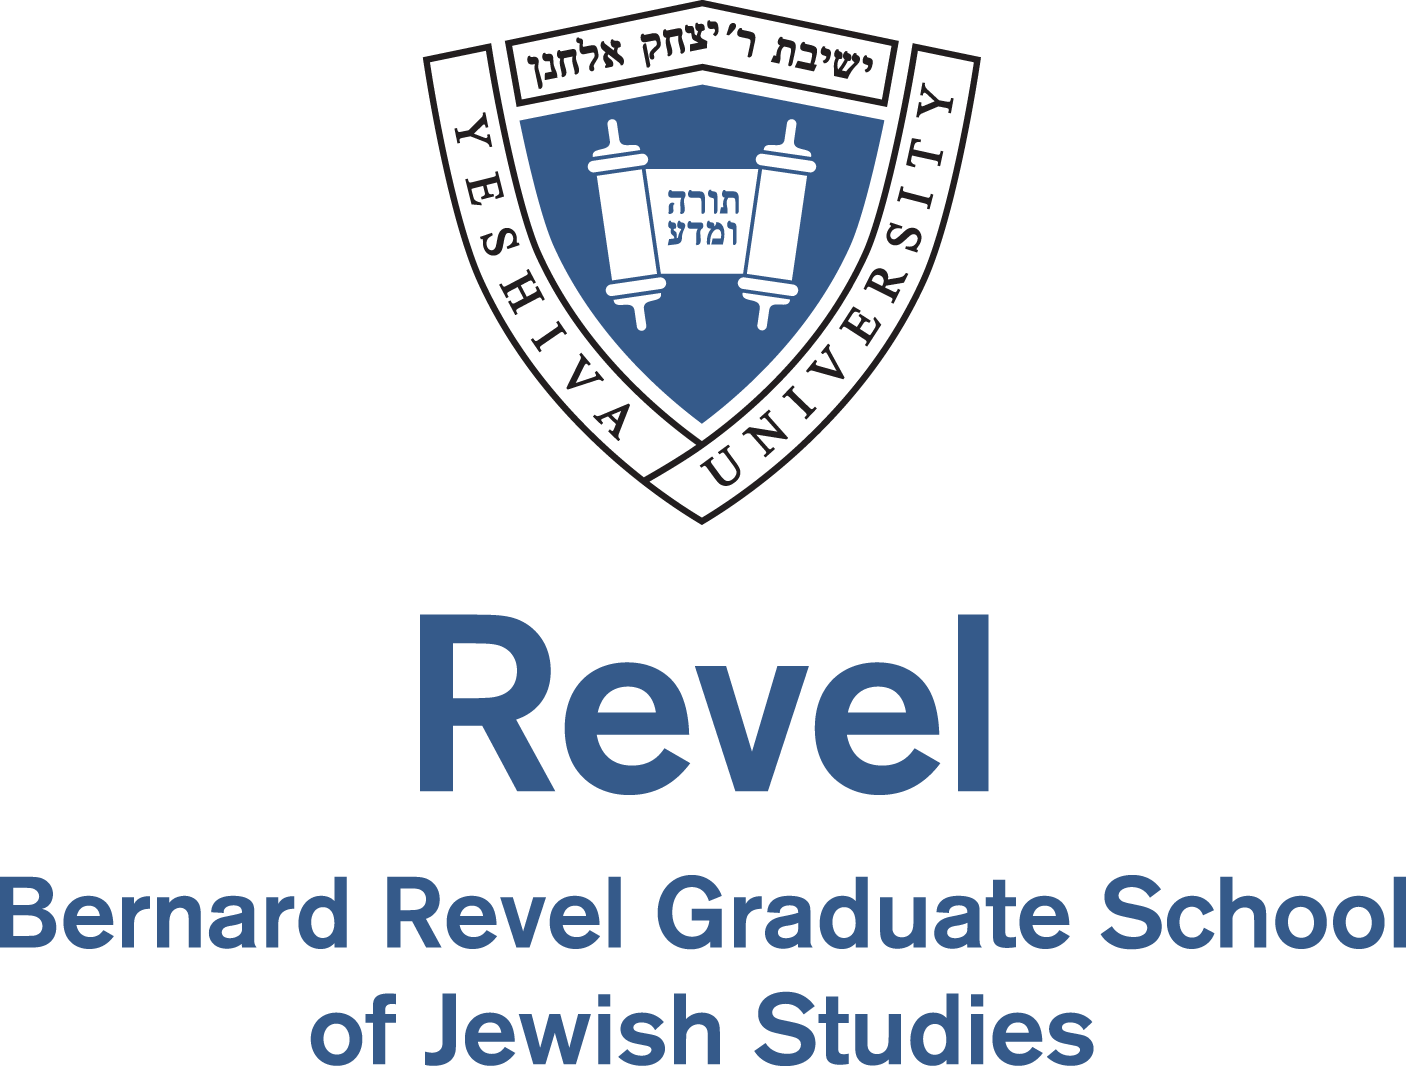 Bernard Revel Graduate School of Jewish Studies